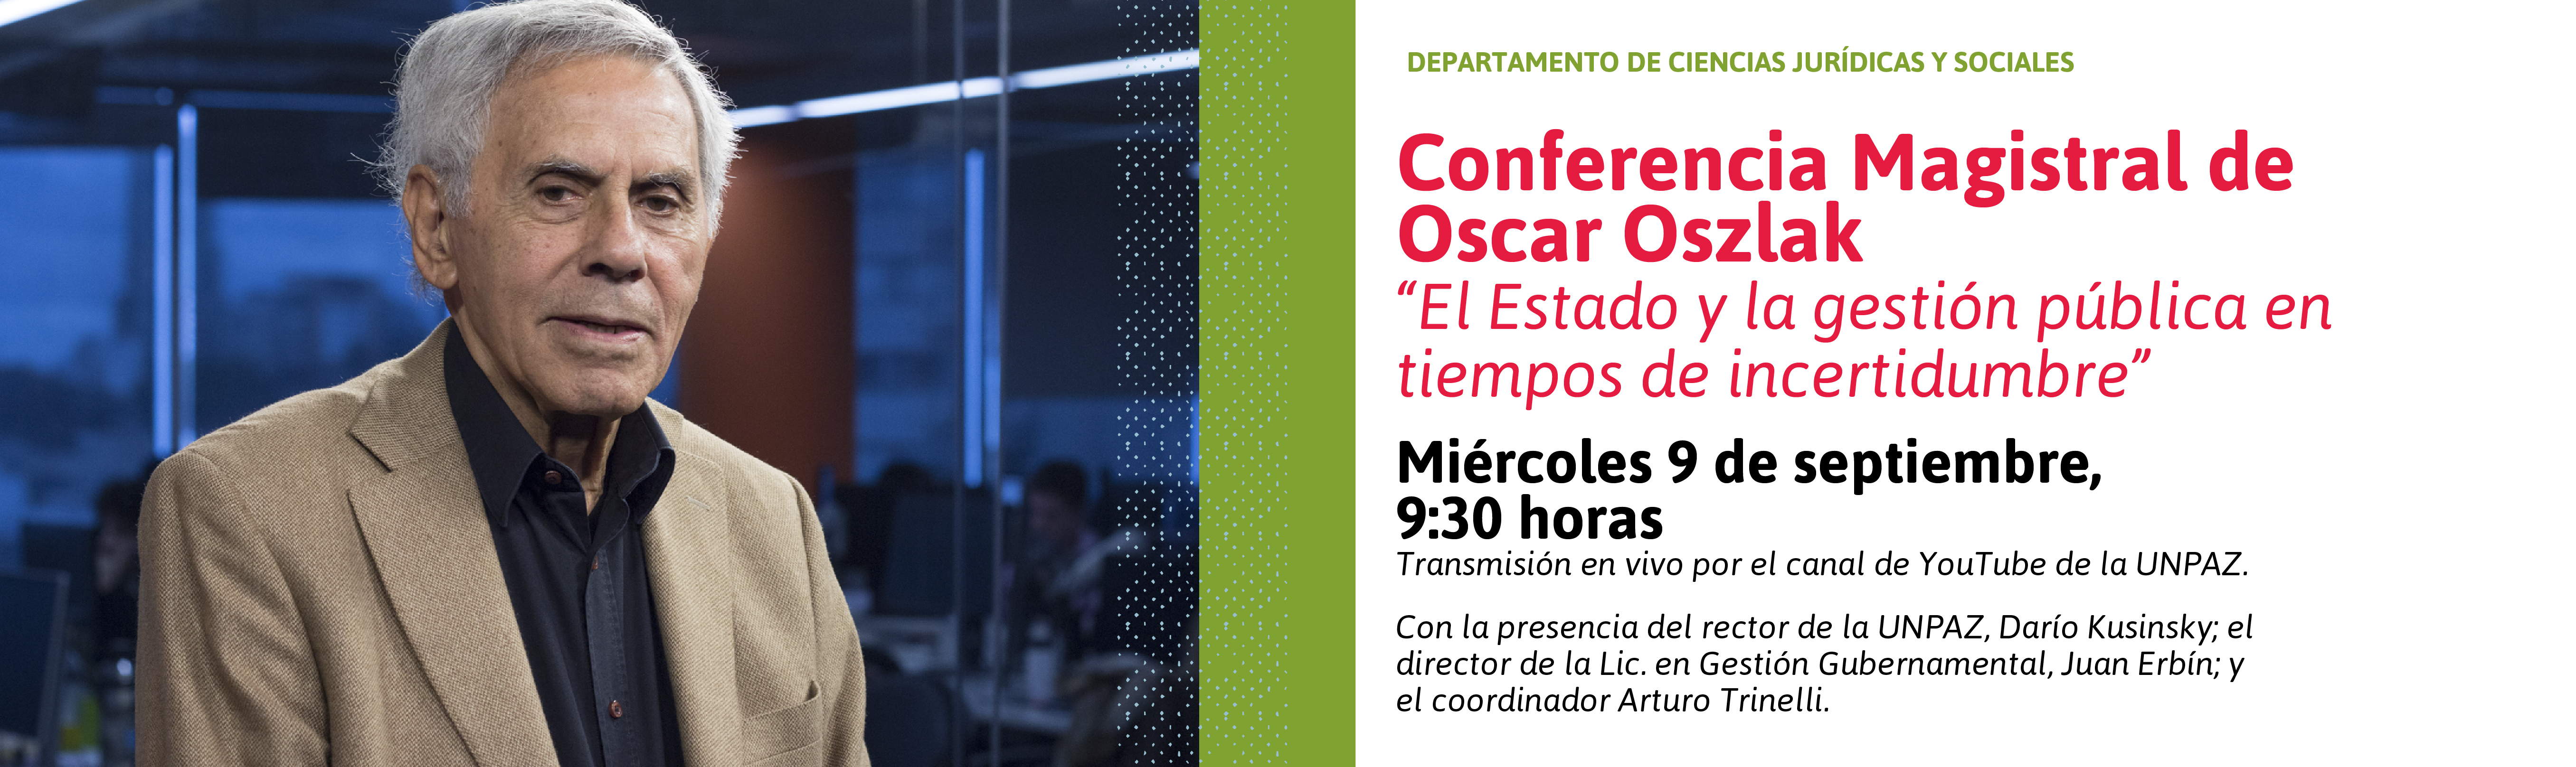 Conferencia magistral de Oscar Oszlak